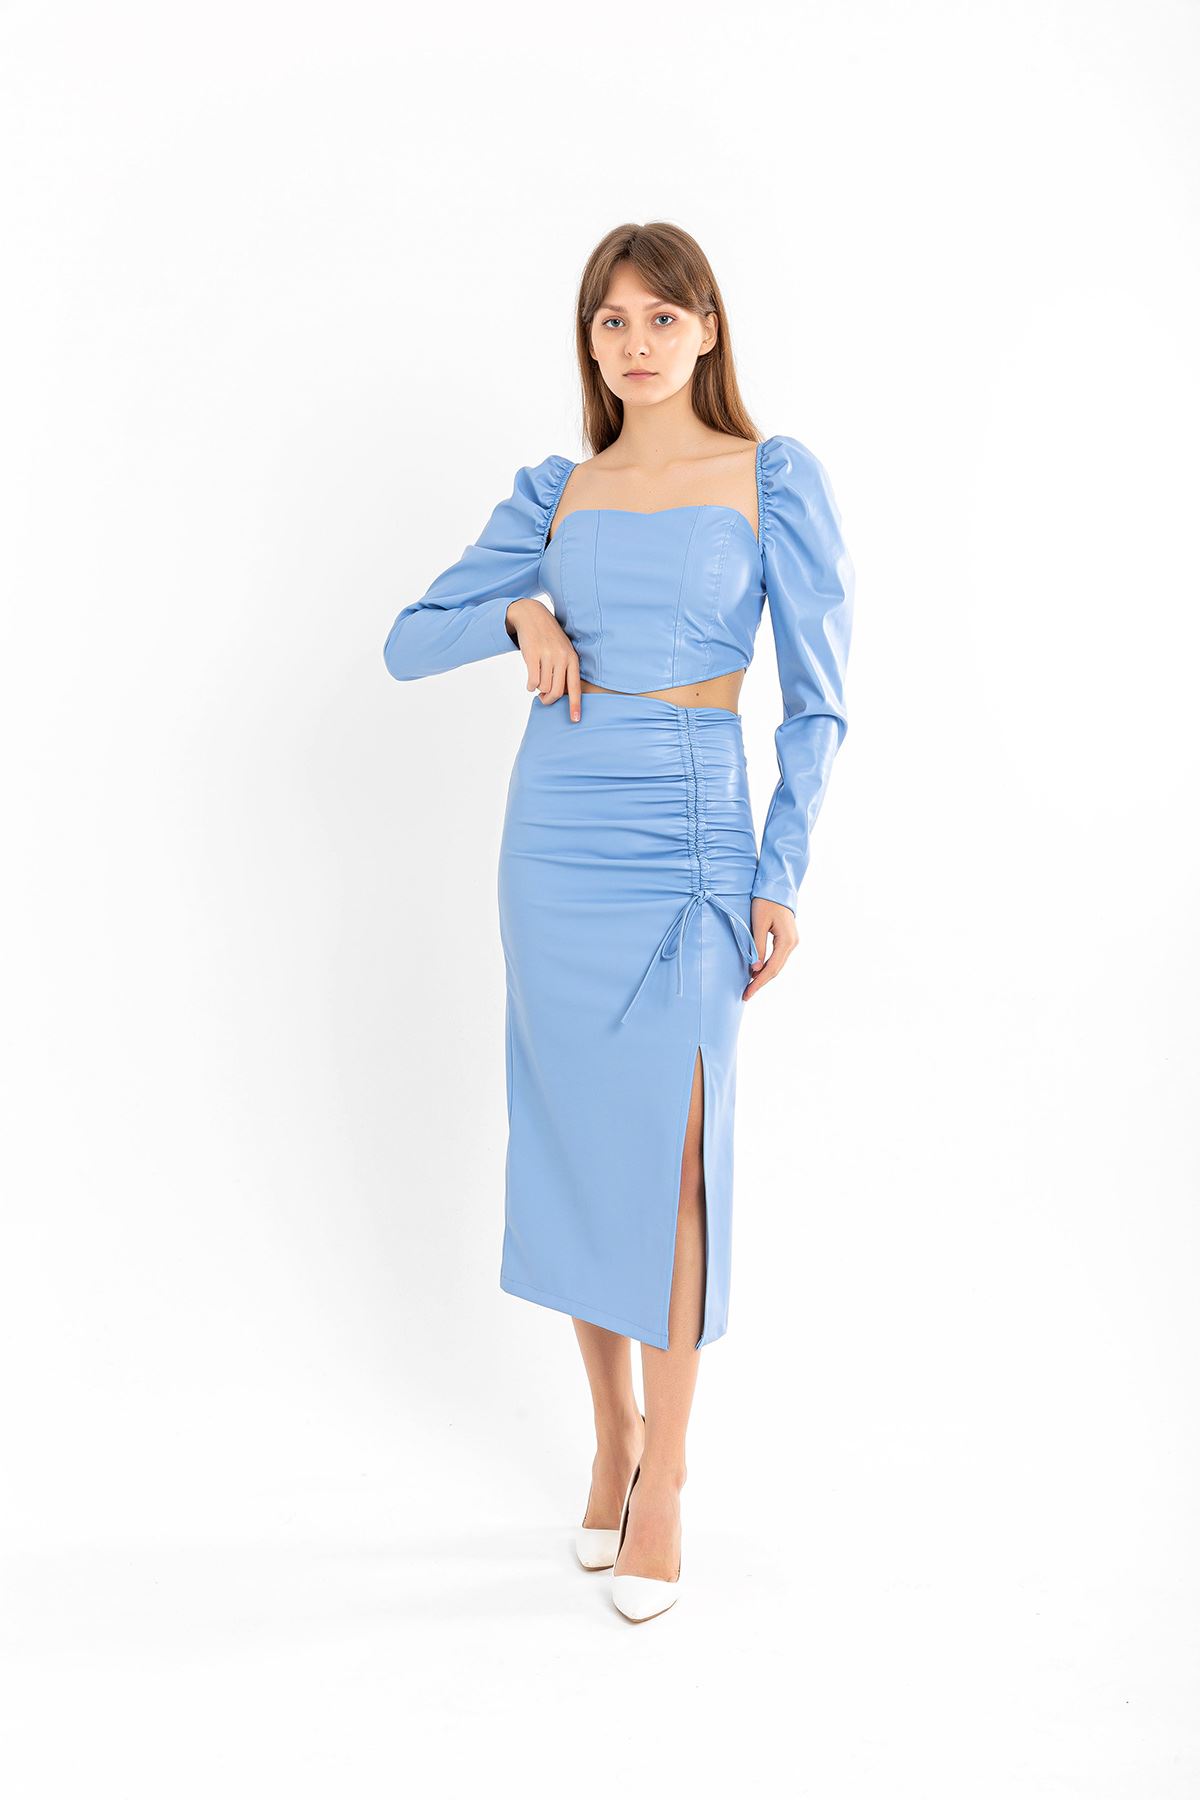 Leather Fabric Above Knee Shirred Slit Women'S Skirt - Blue